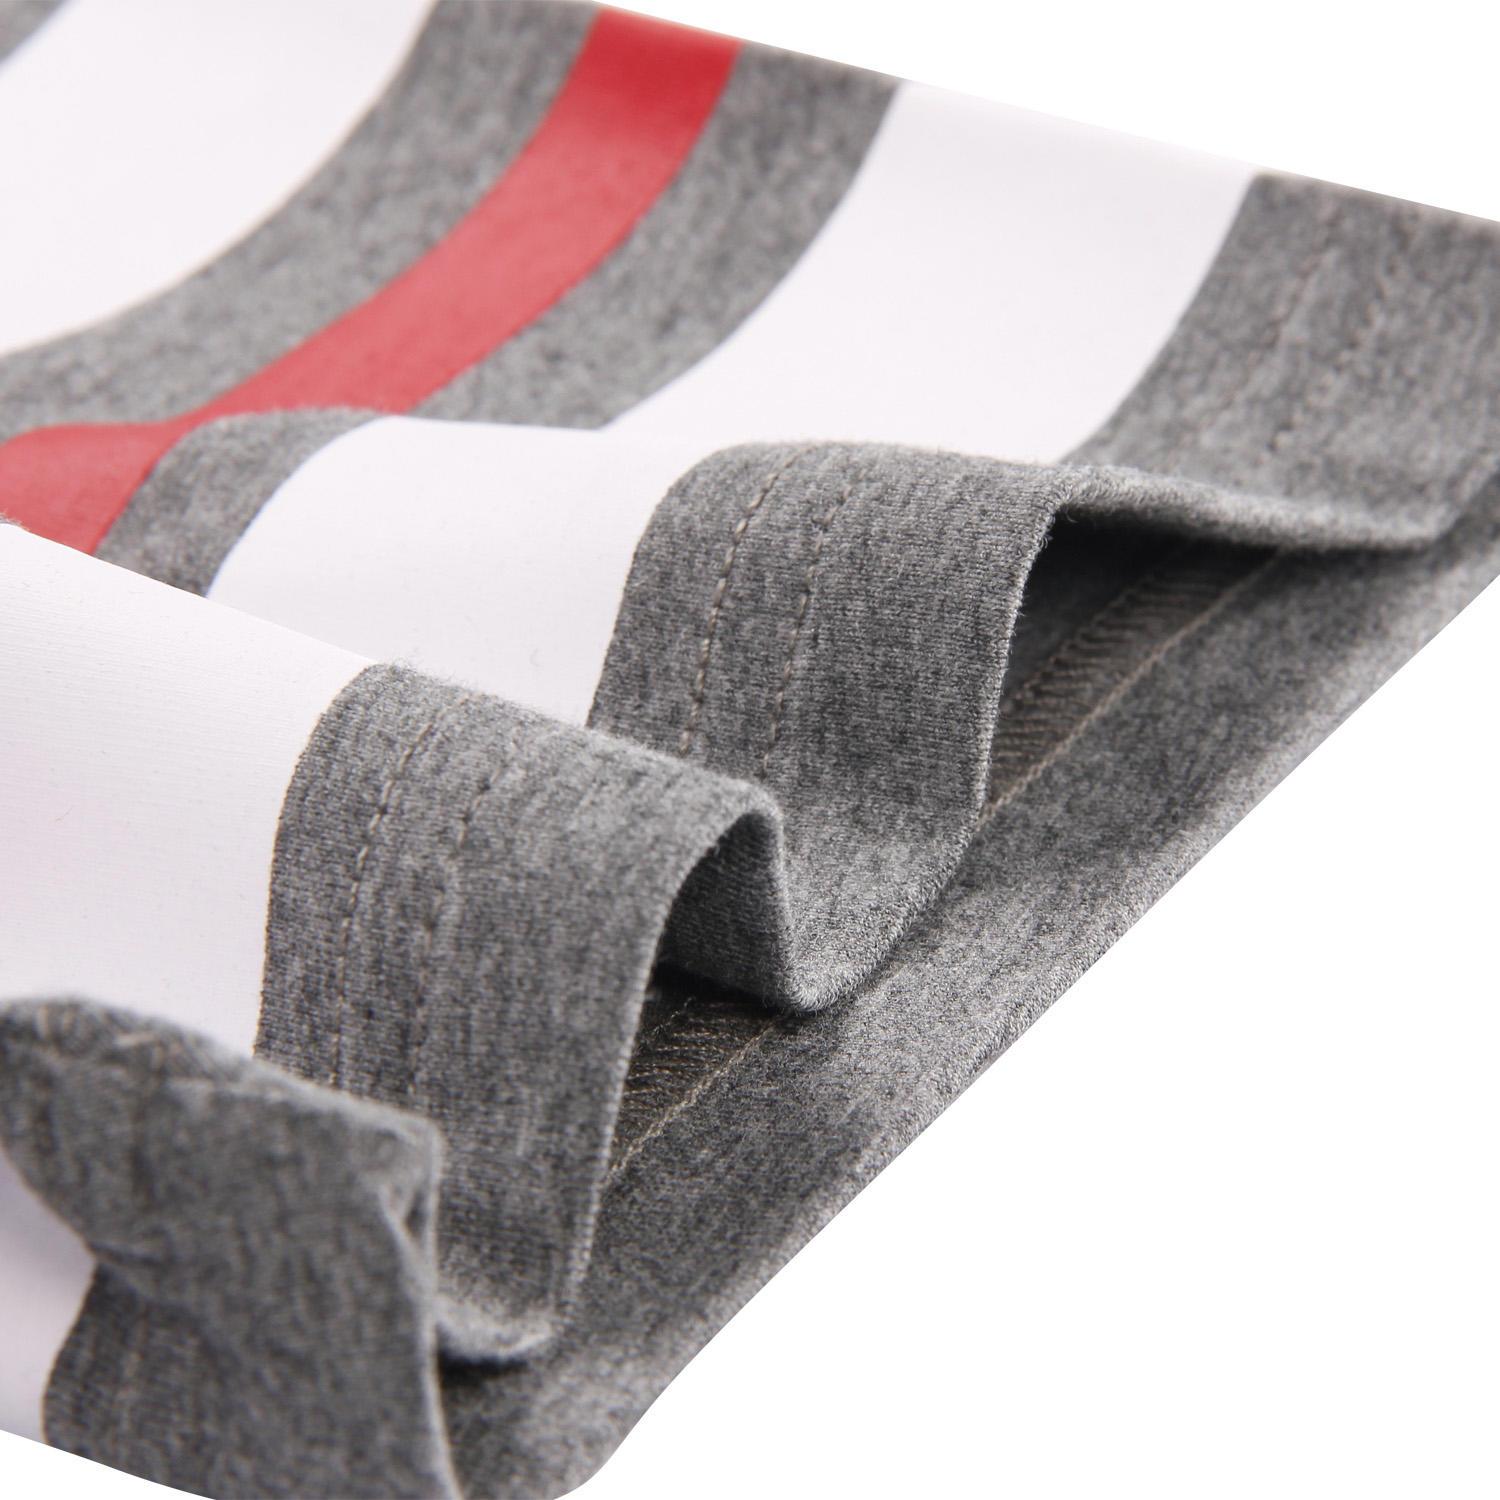 Brand Quality China Apparel Soft 100 Cotton Mens Shirt High Quality T shirt